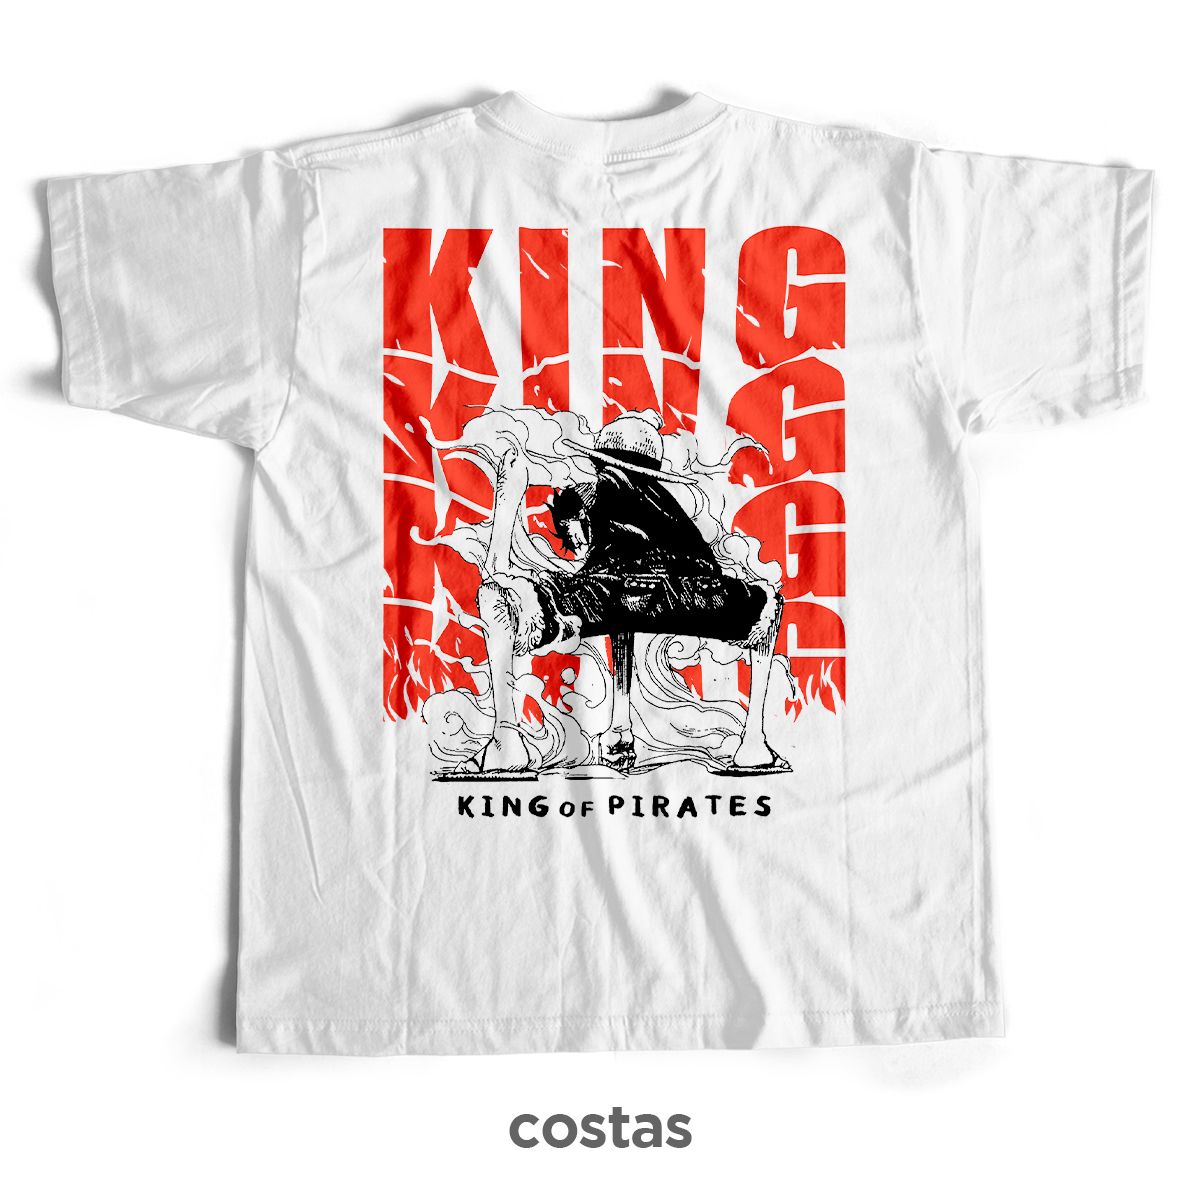 Nome do produto: Camiseta Branca - King of Pirates (Costas)